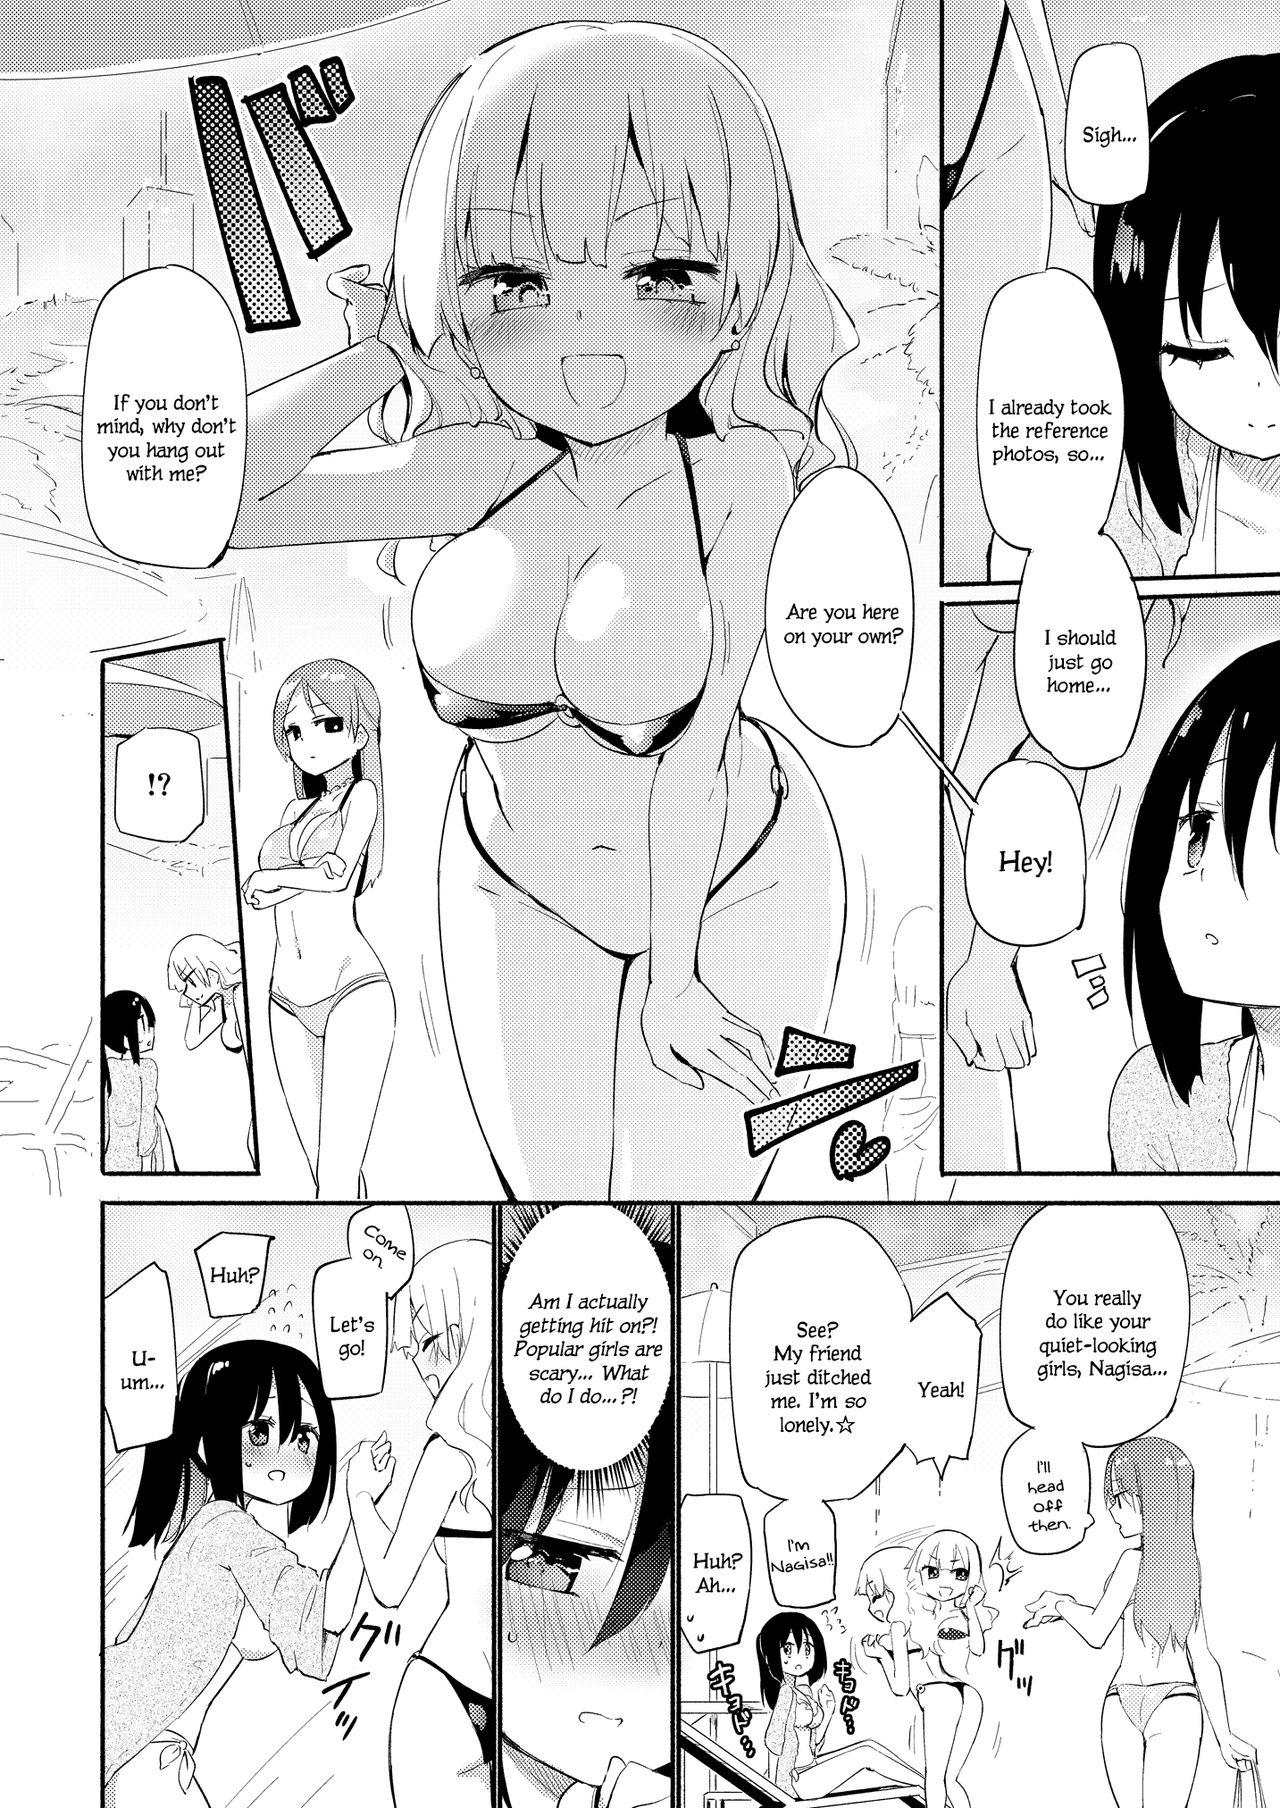 Fat Hikage Joshi vs Hae Spot Joshi | Background Girl vs Spotlight Girl - Original Sapphic Erotica - Page 2